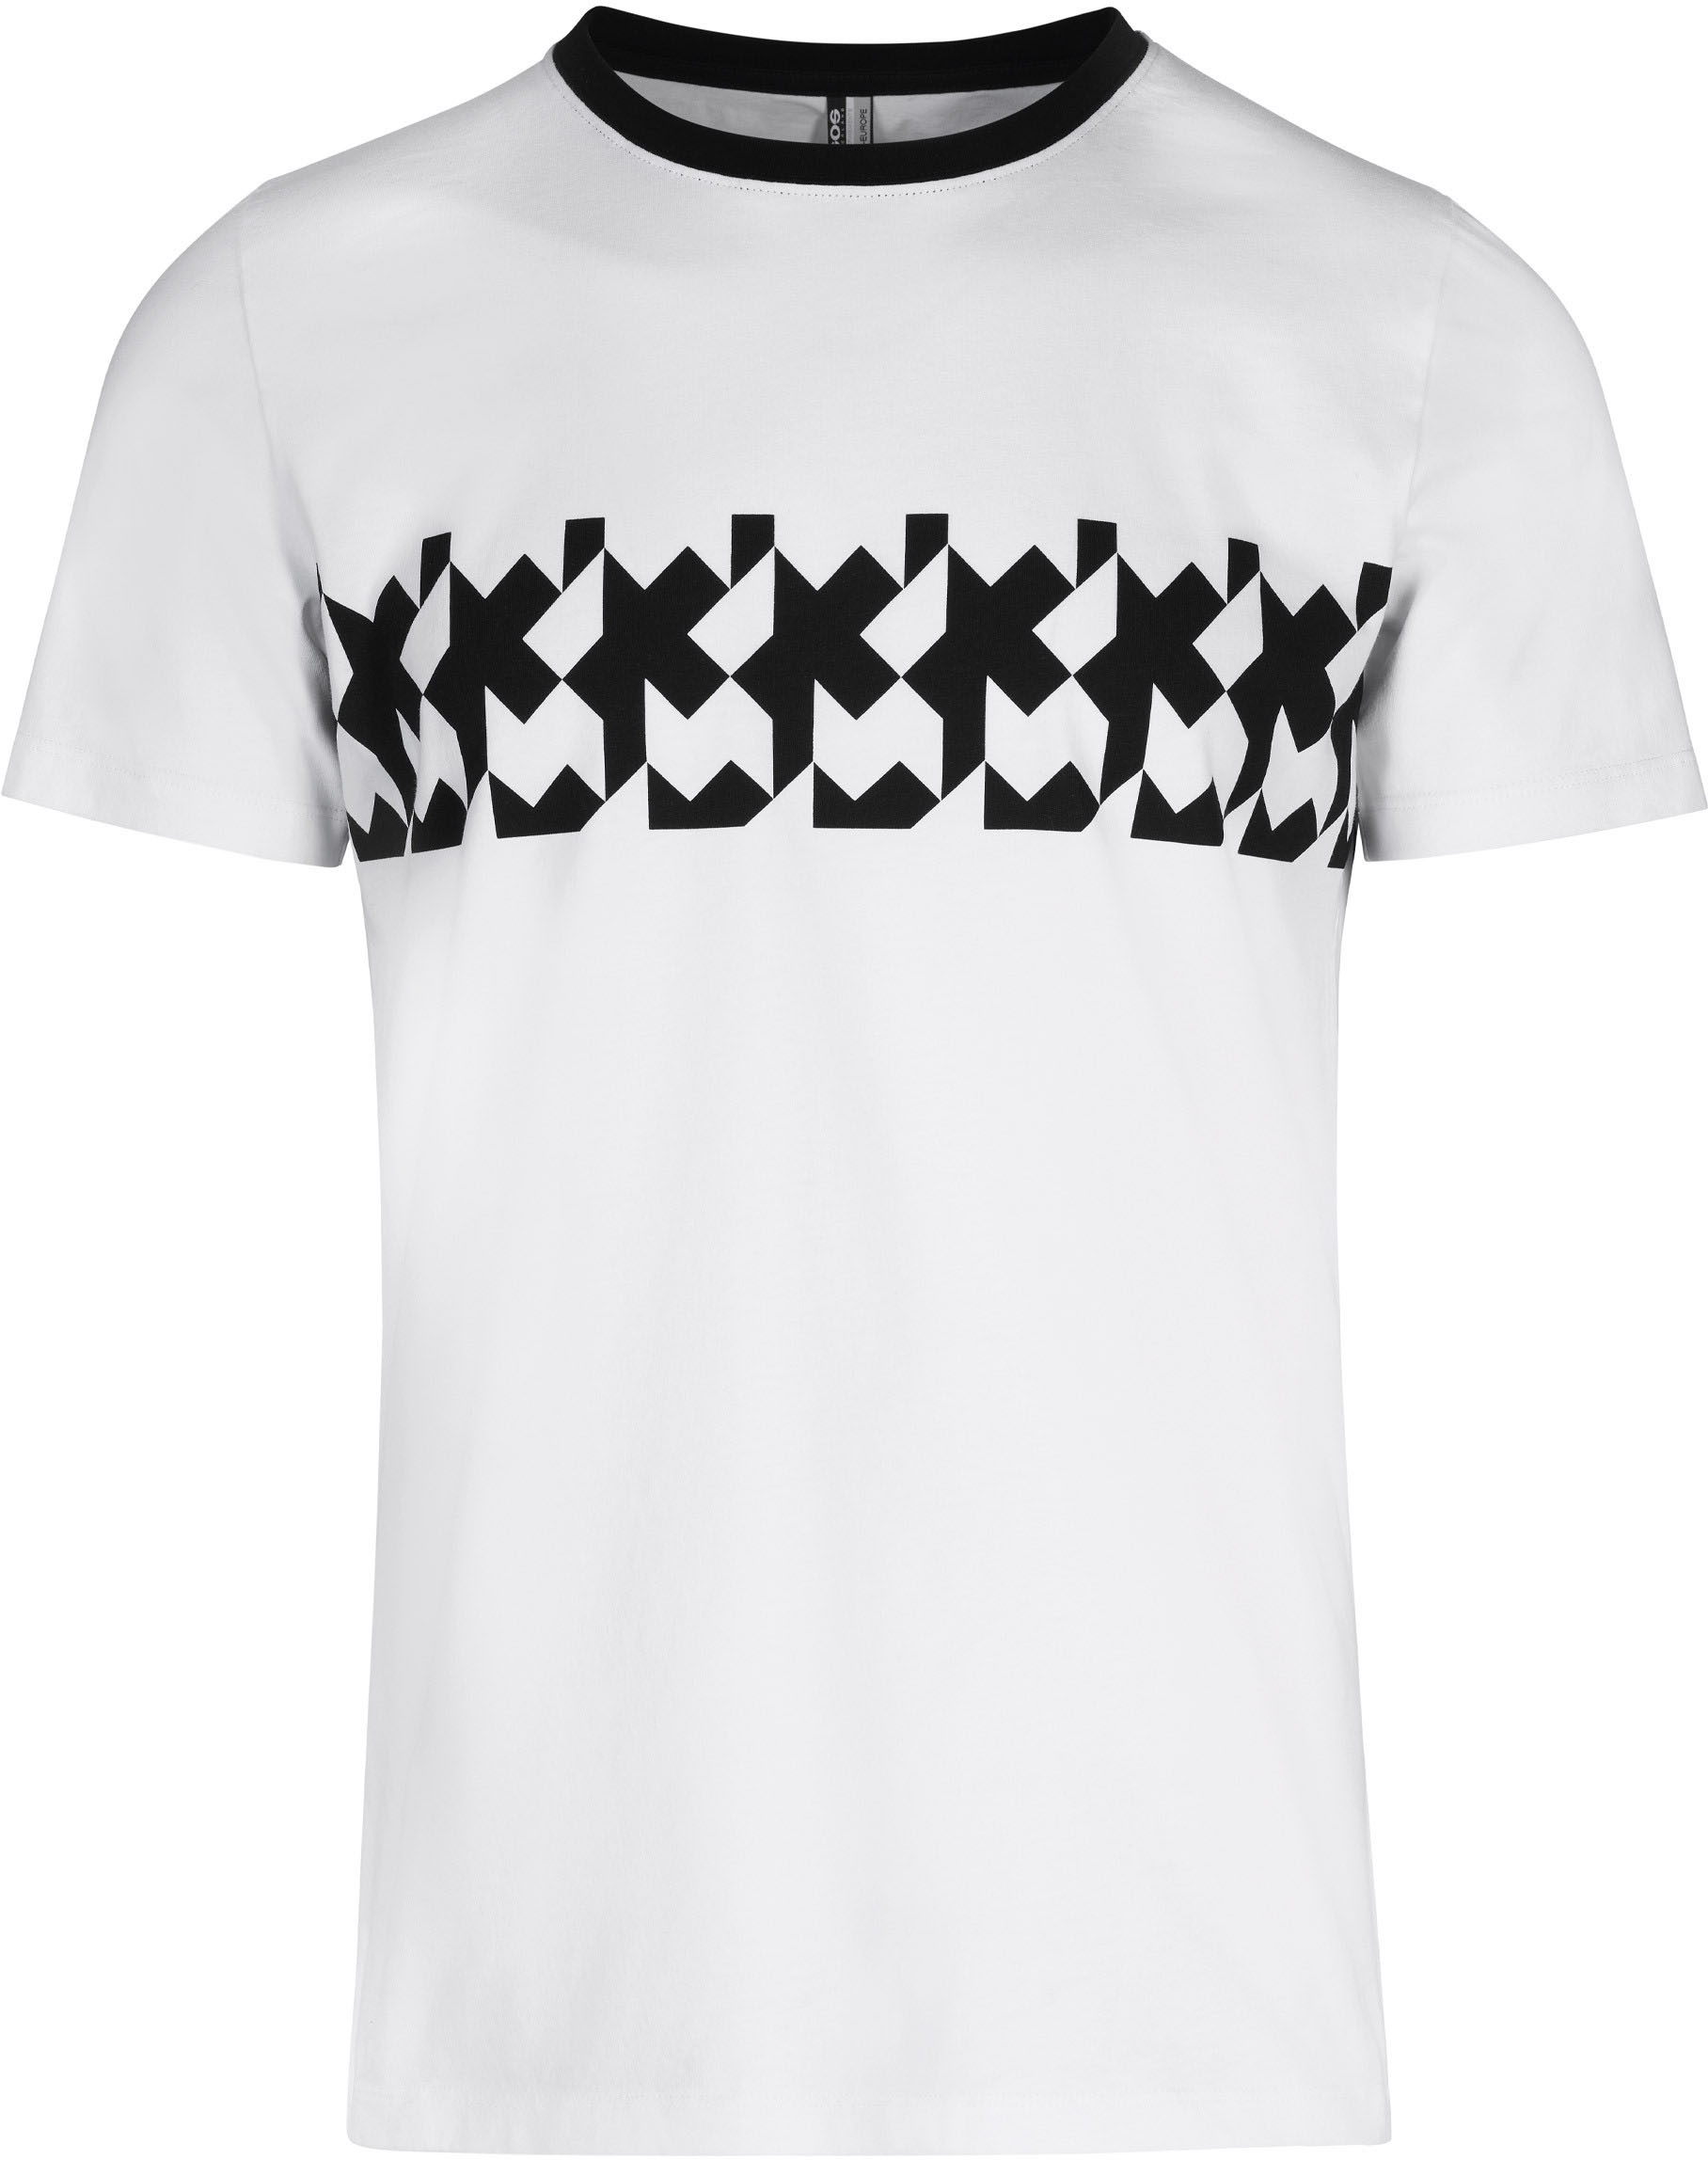 Beklædning - Merchandise - Assos SIGNATURE Summer T-Shirt RS Griffe - Hvid